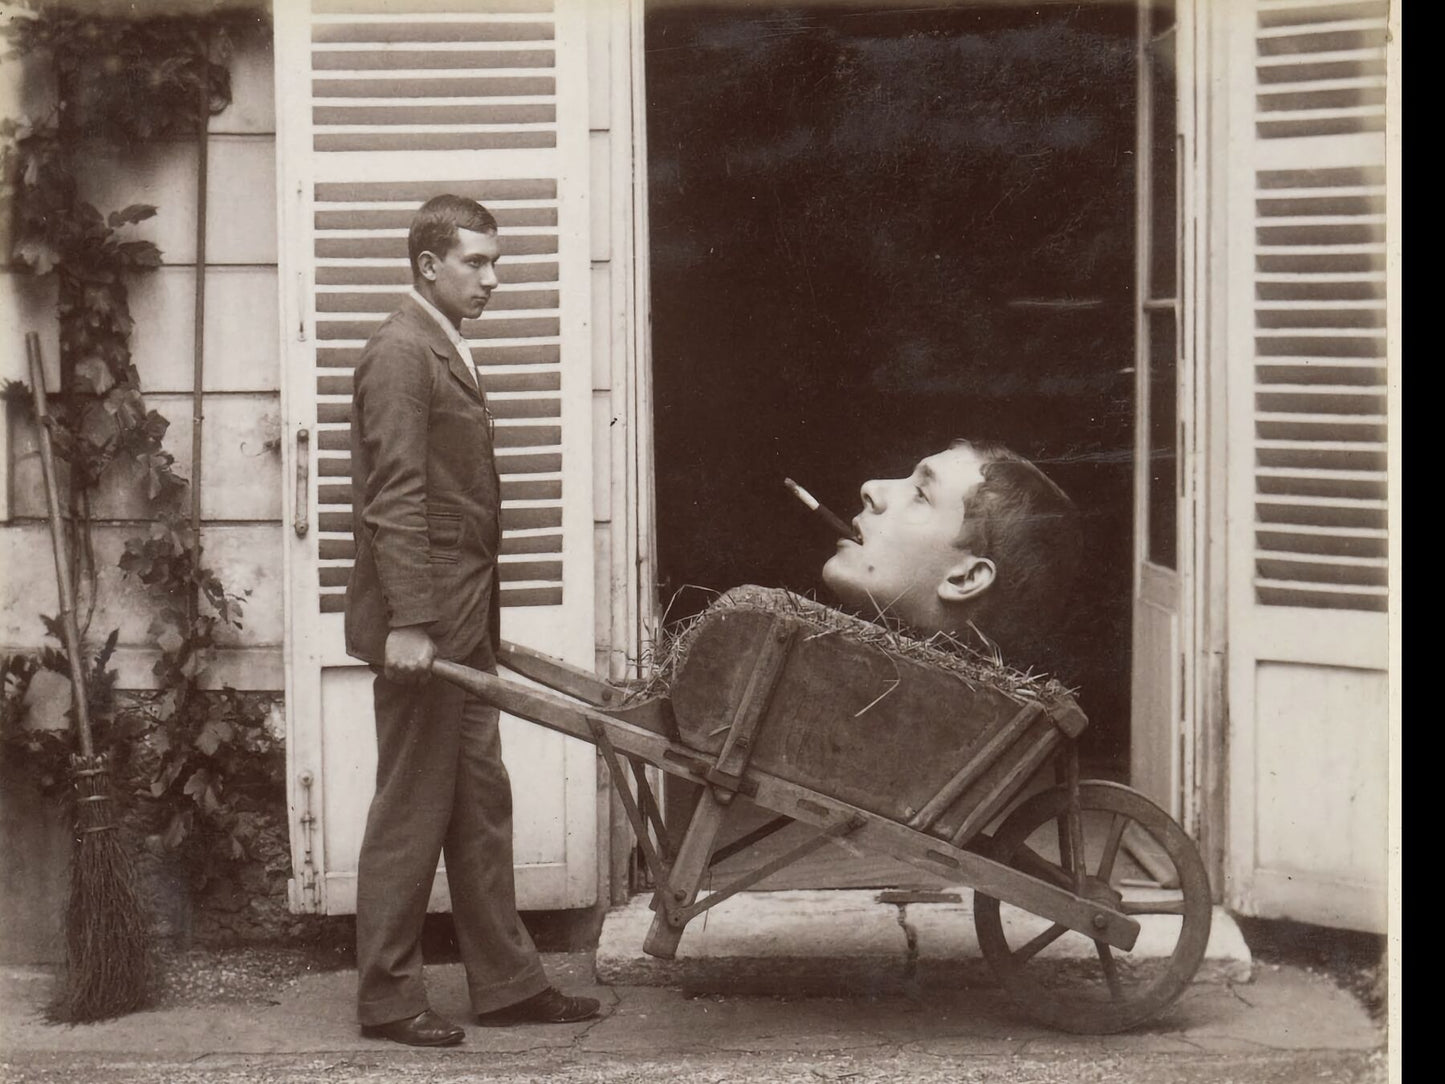 Man Carries (Mounted) Head on Wheelbarrow - c. 1910